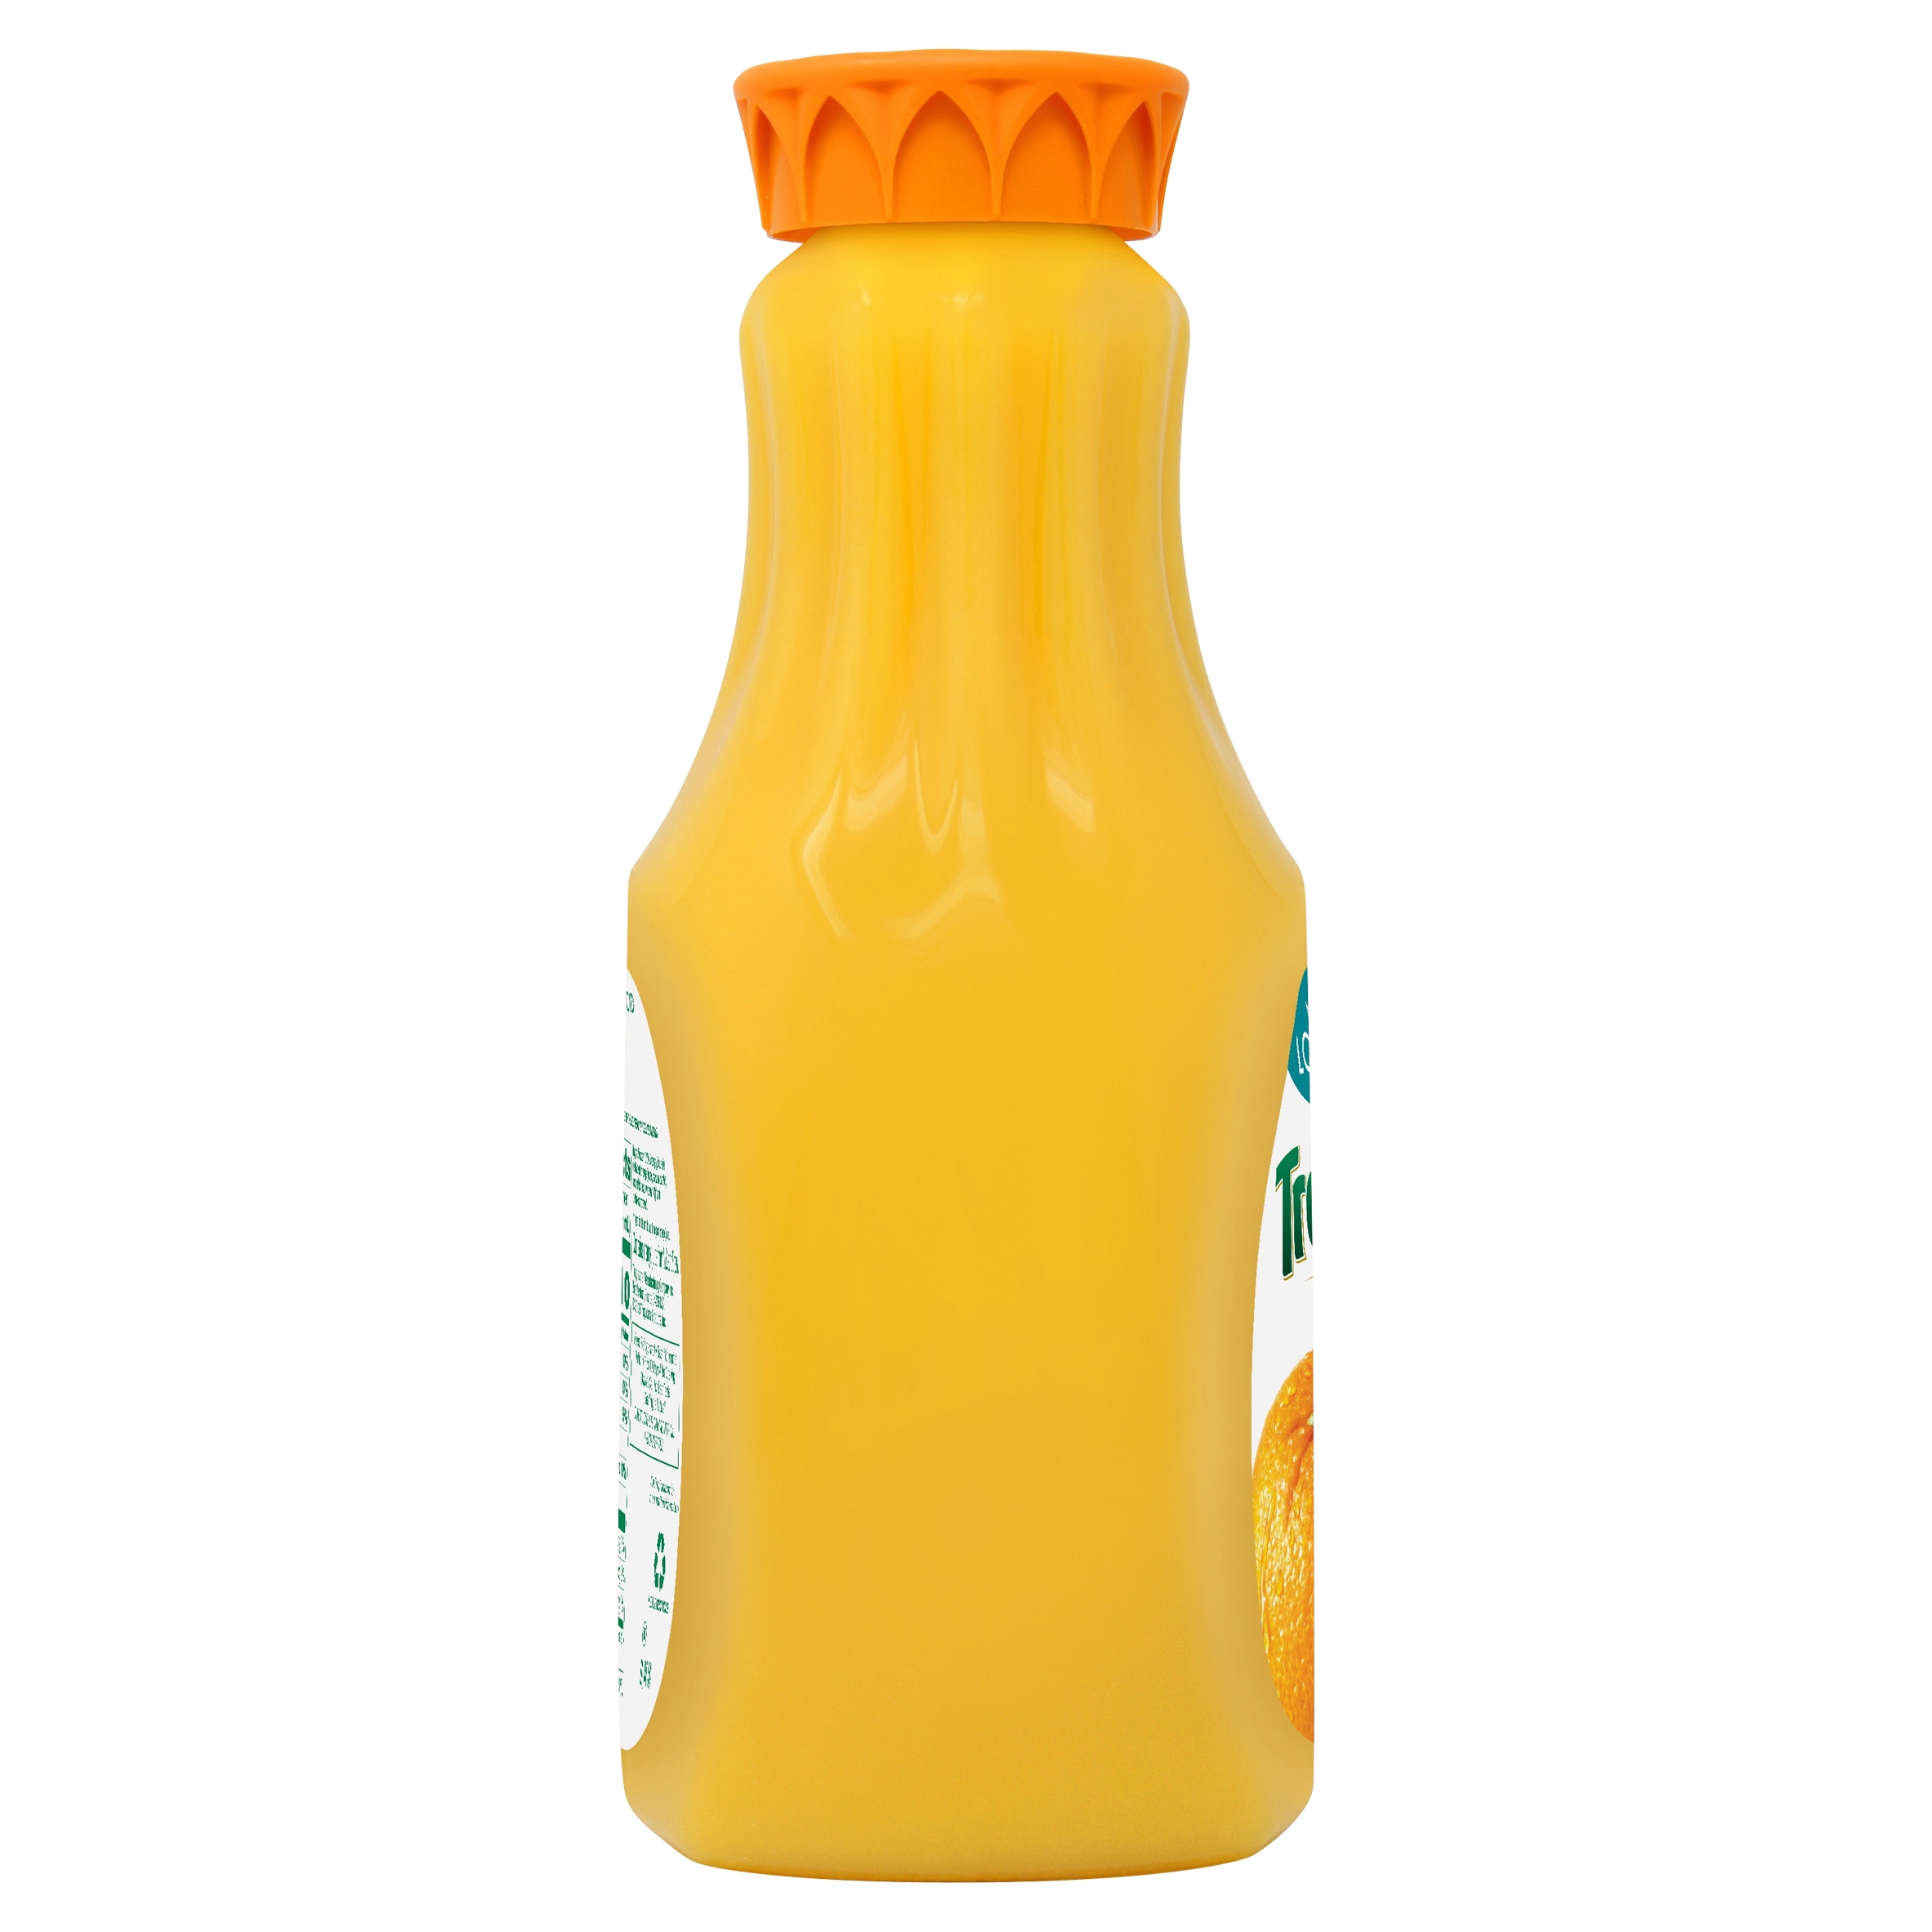 Tropicana Pure Premium Low Acid 100% Juice Orange No Pulp with Vitamins A and C 52 fl oz Bottle, Fruit Juice - image 4 of 9